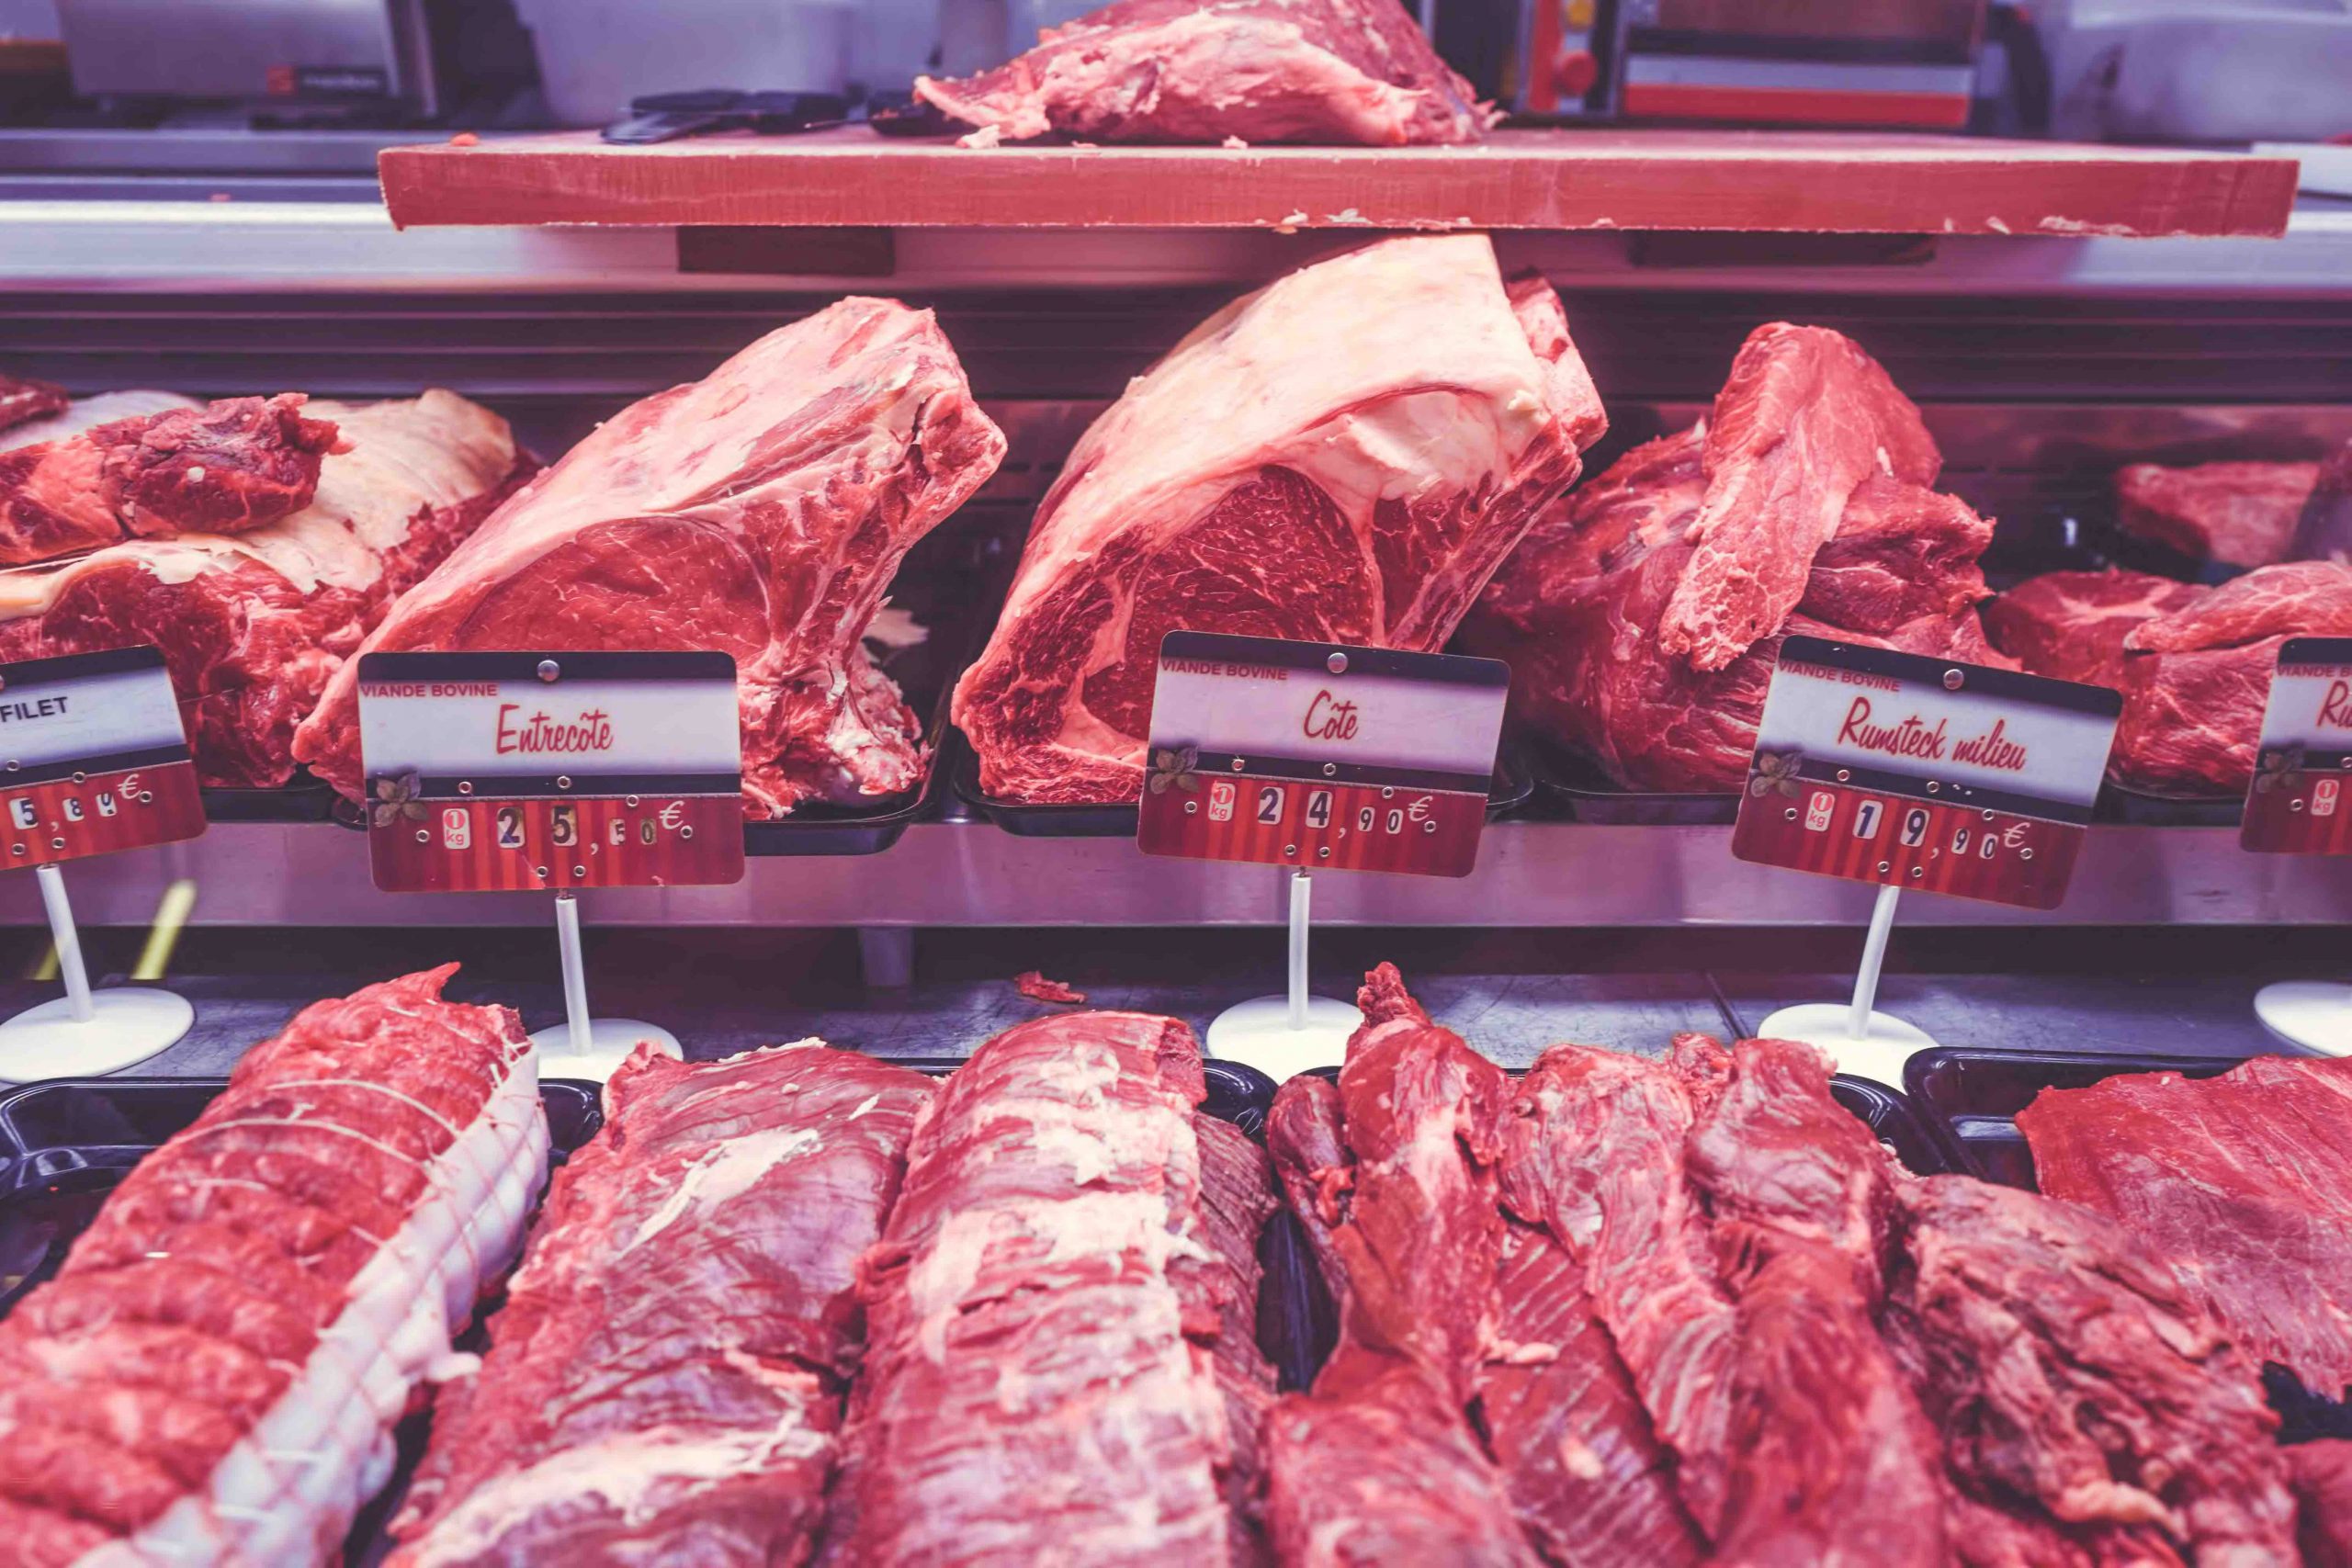 Meat at a butcher shop retail